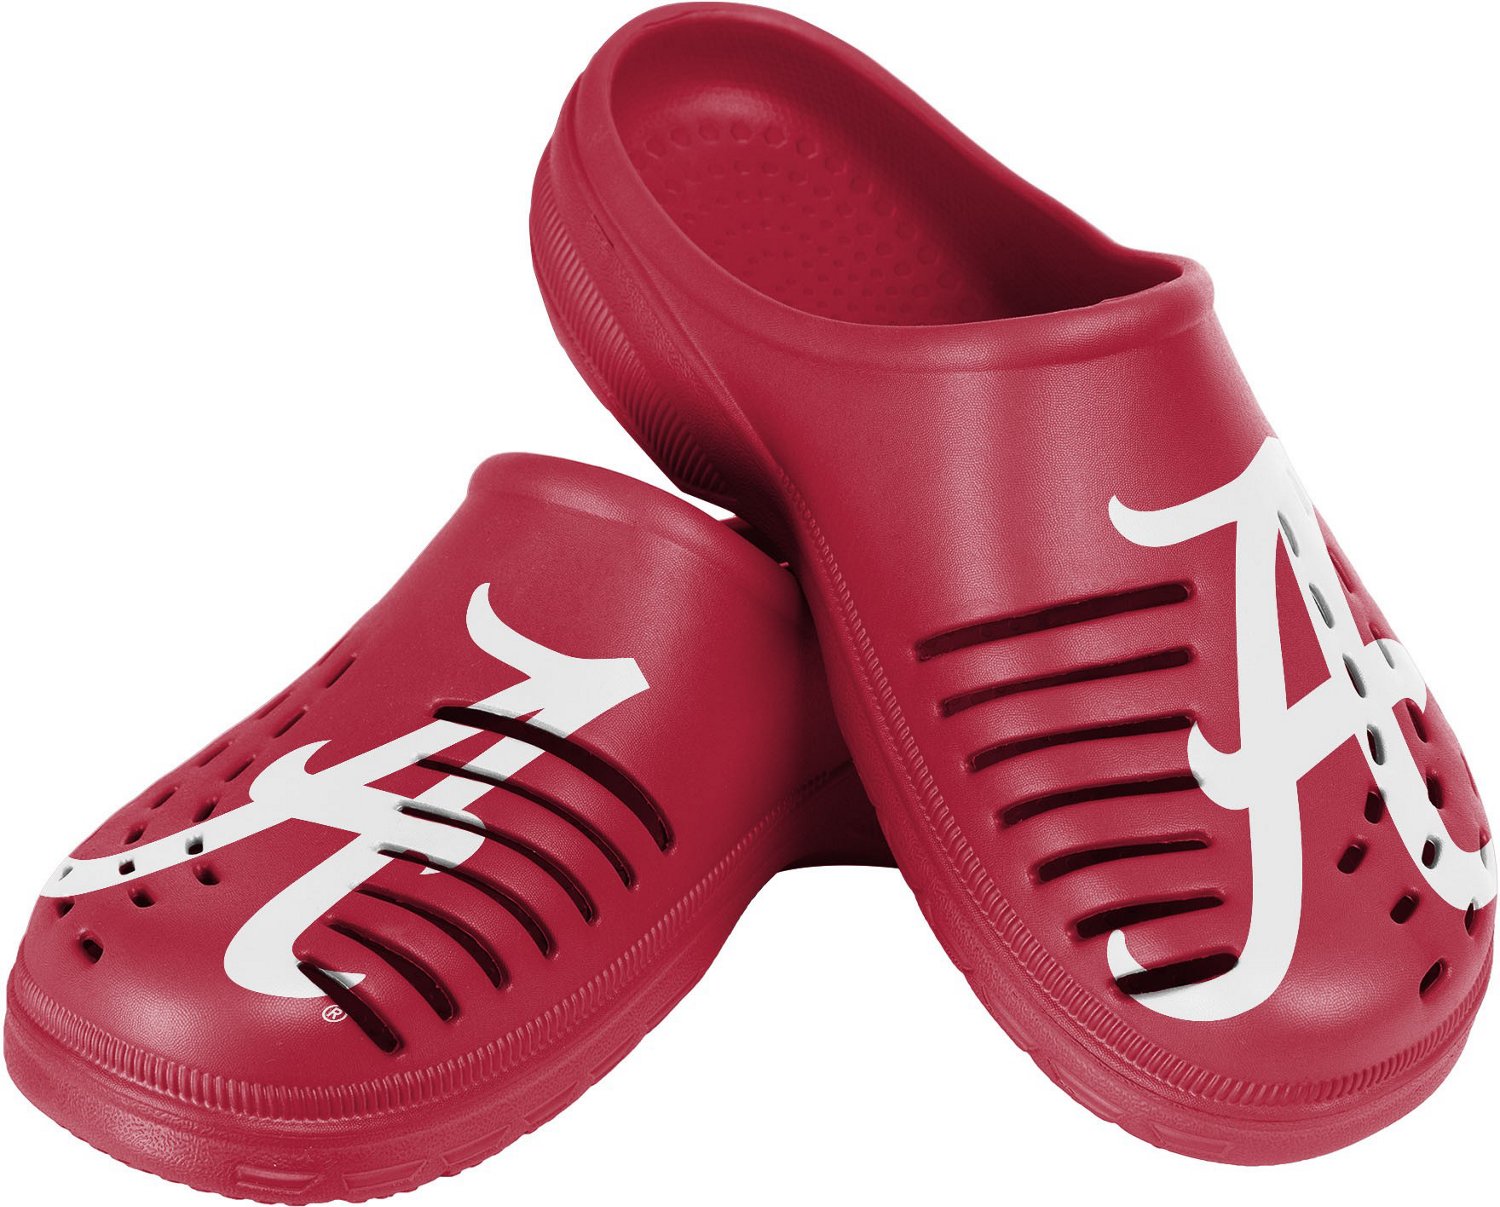 FOCO Men's NFL Team Logo Garden Water Sandals Shoes Slipper Clogs